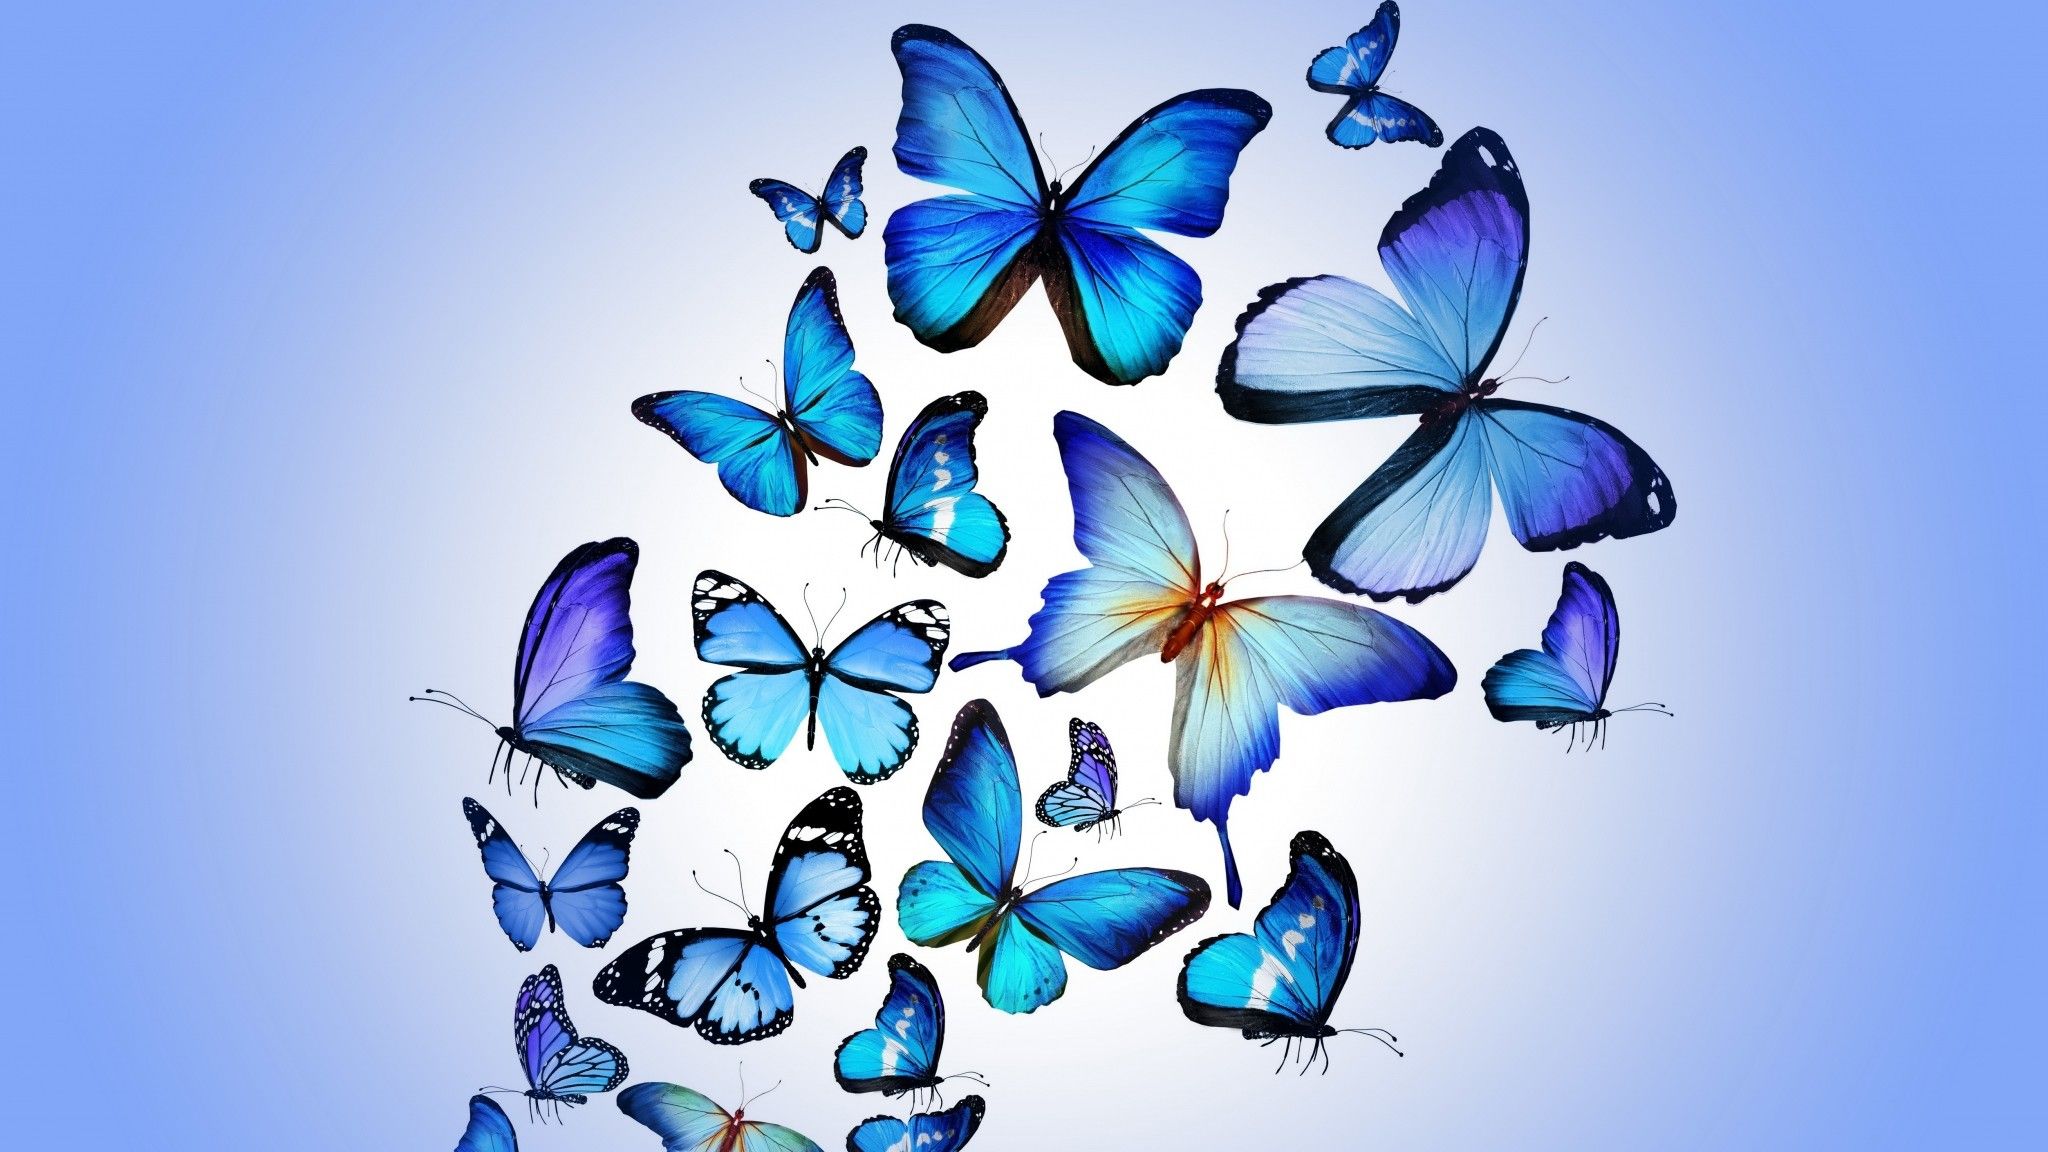 Butterfly Wallpaper For Desktop Freewalpaperlist.com